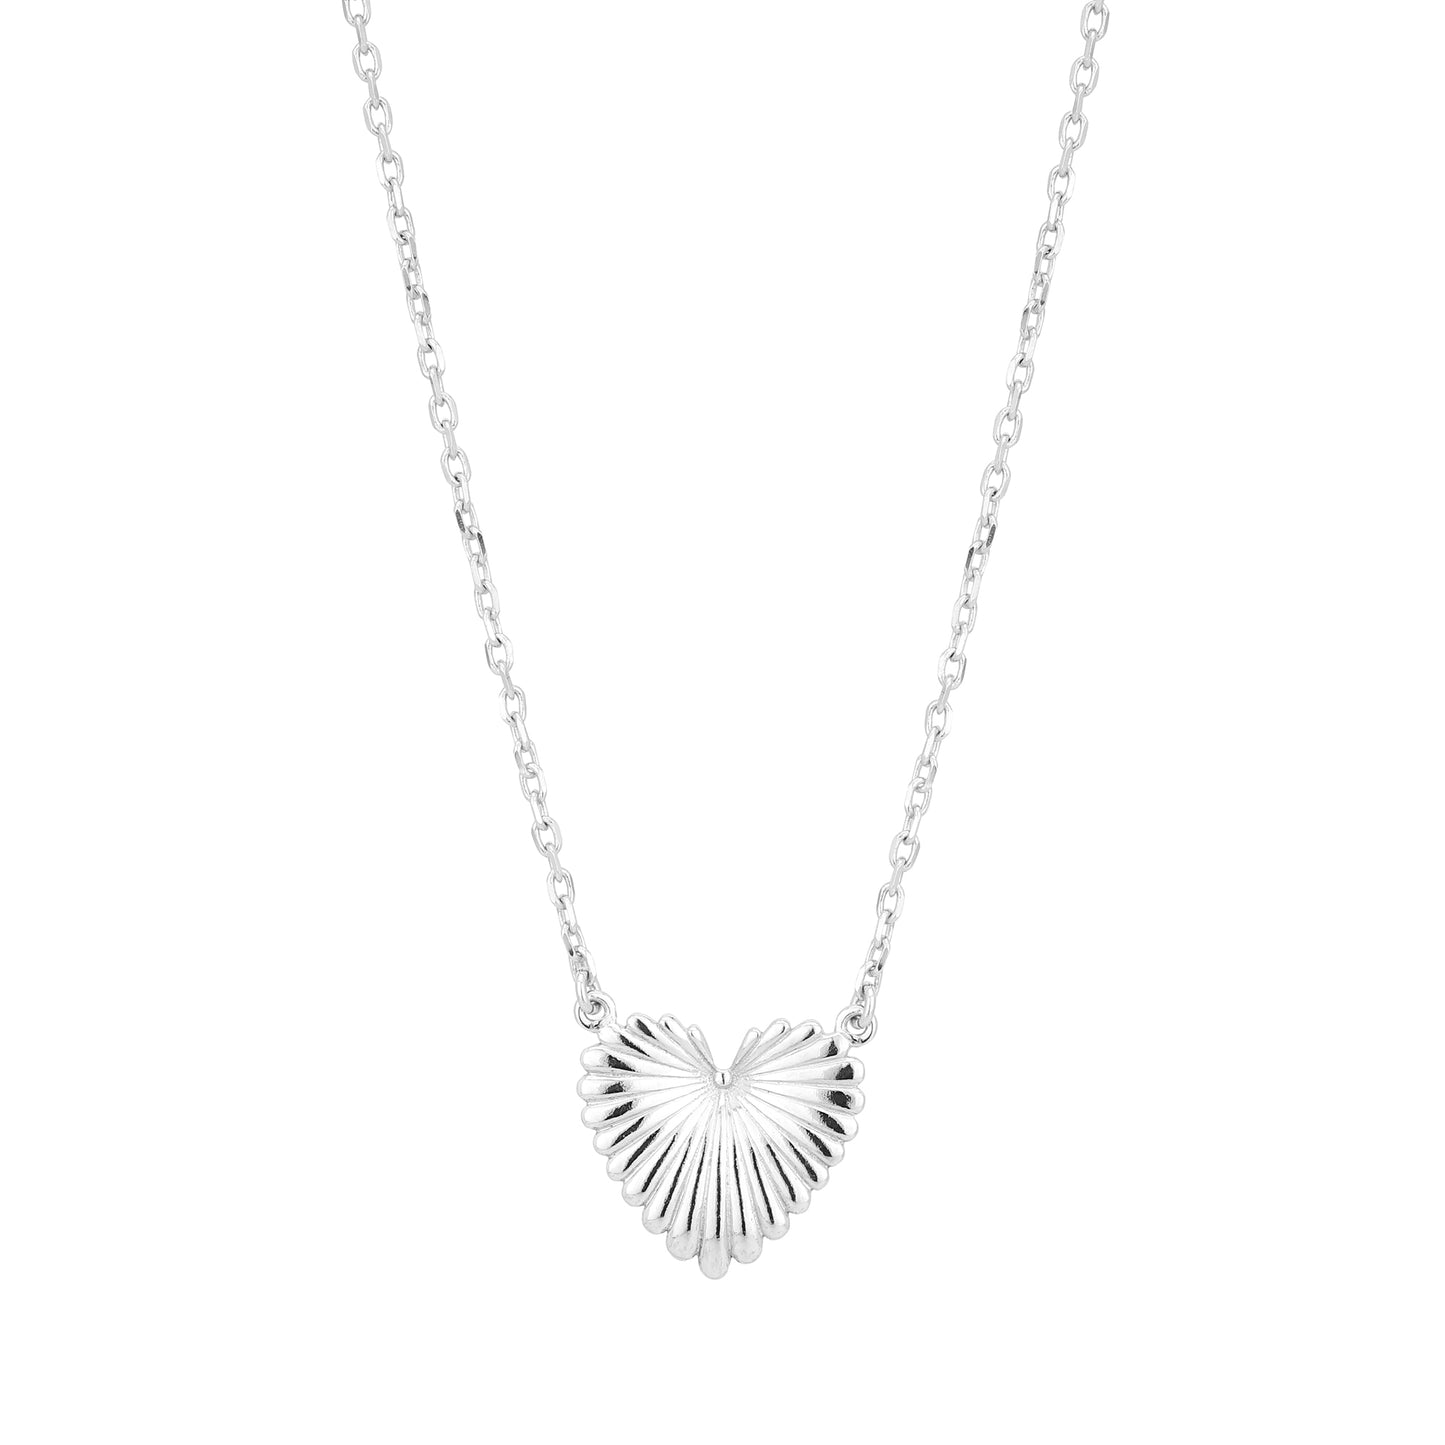 Carlton London Heart Shaped Silver Pendant Charm Necklace